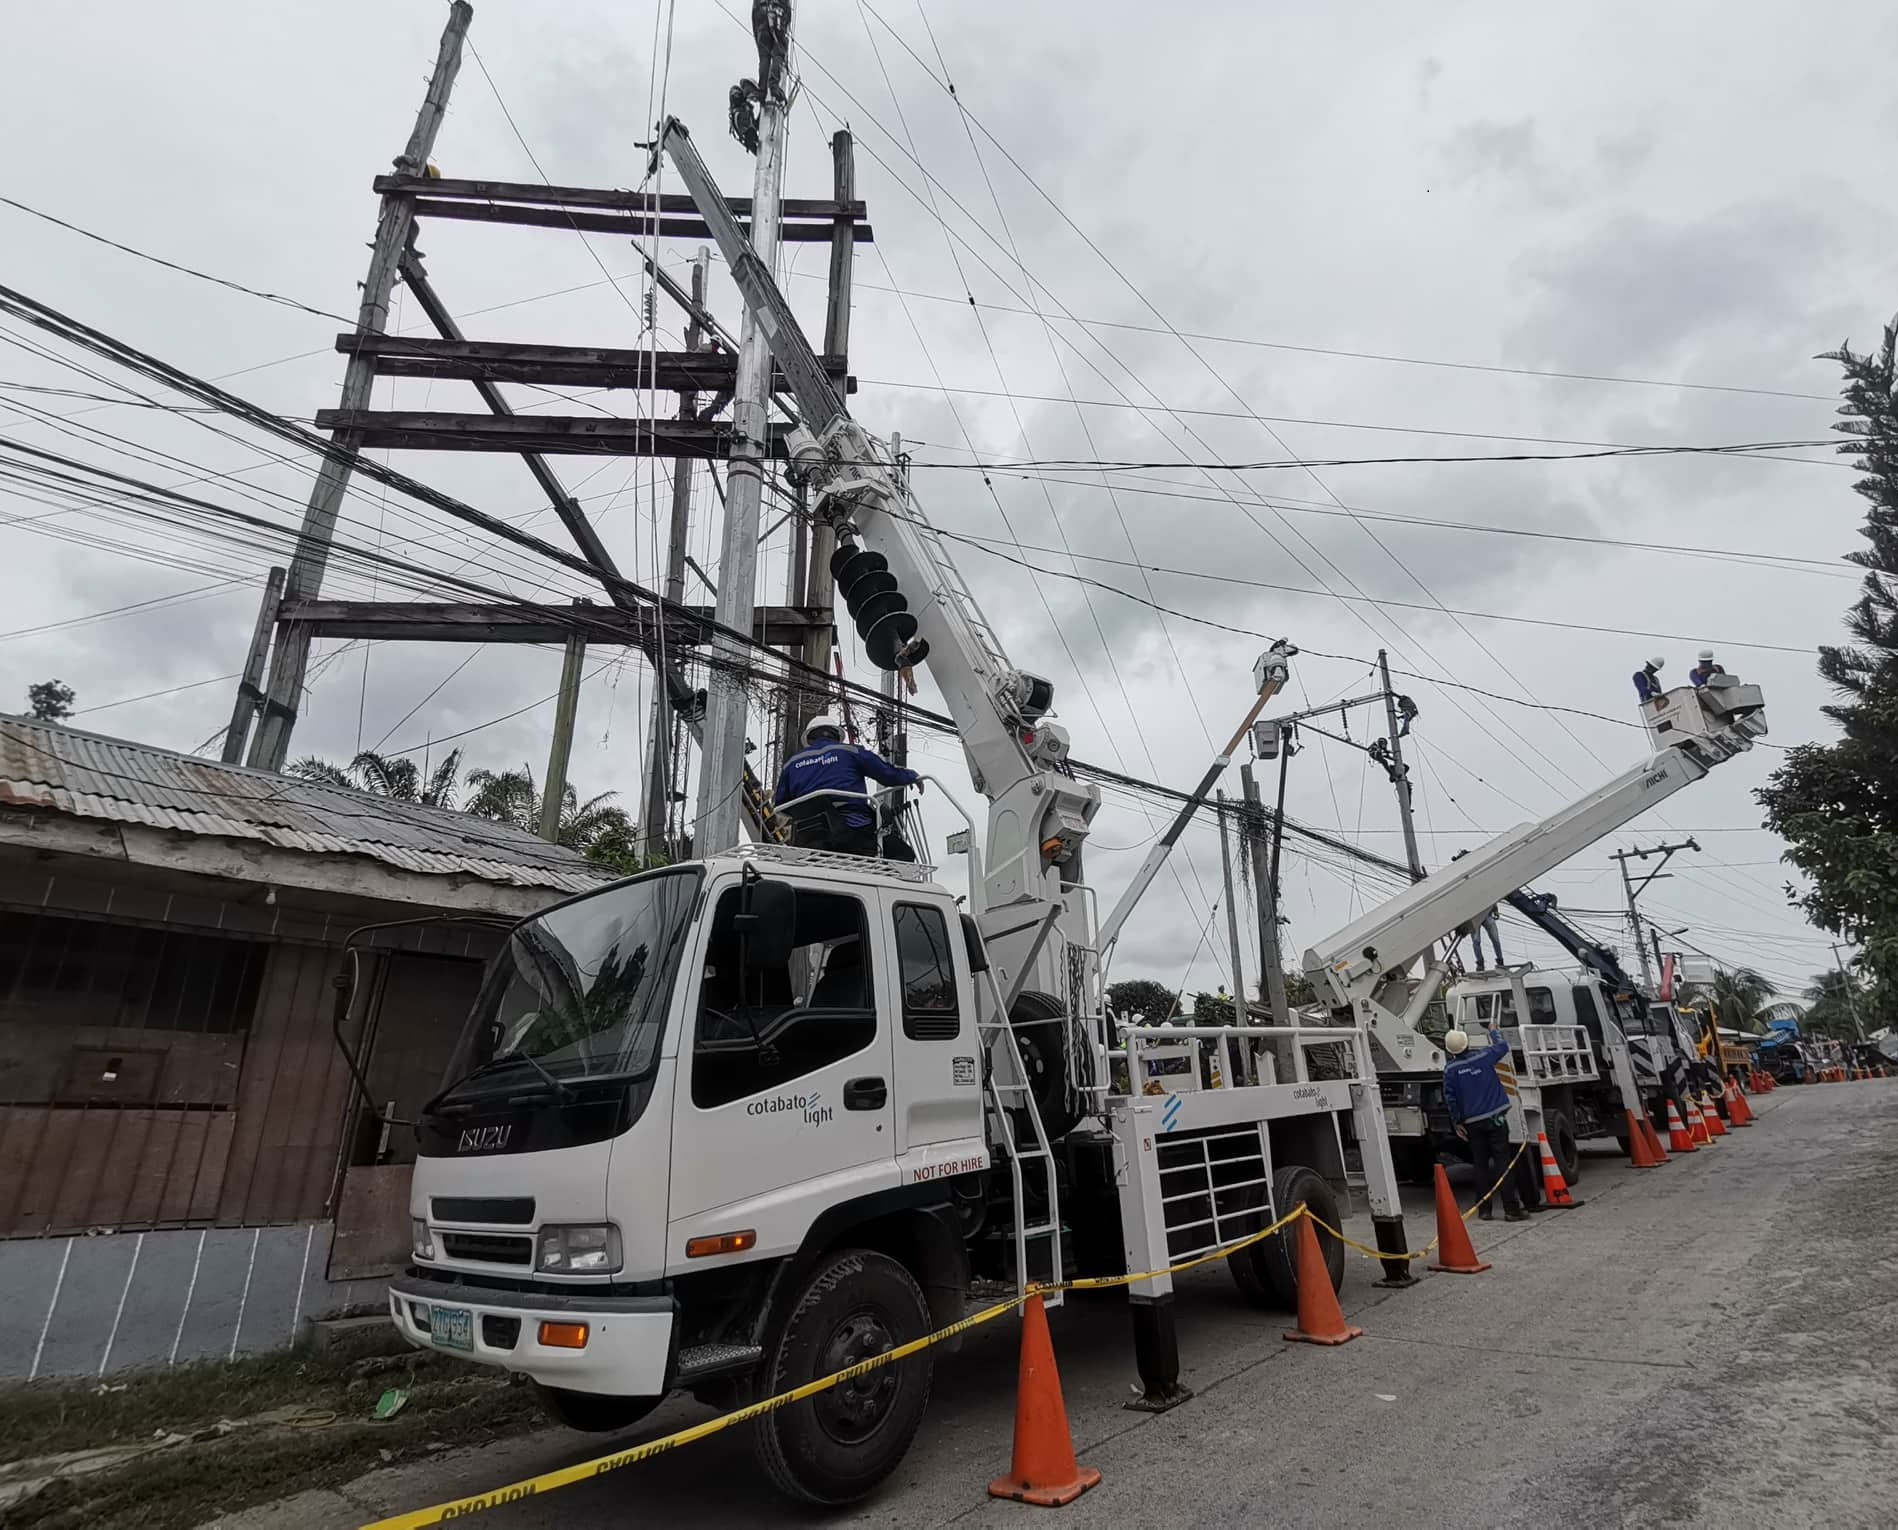 Cotabato Light brings reliable power to 1,500 rural households through Sitio Electrification Program